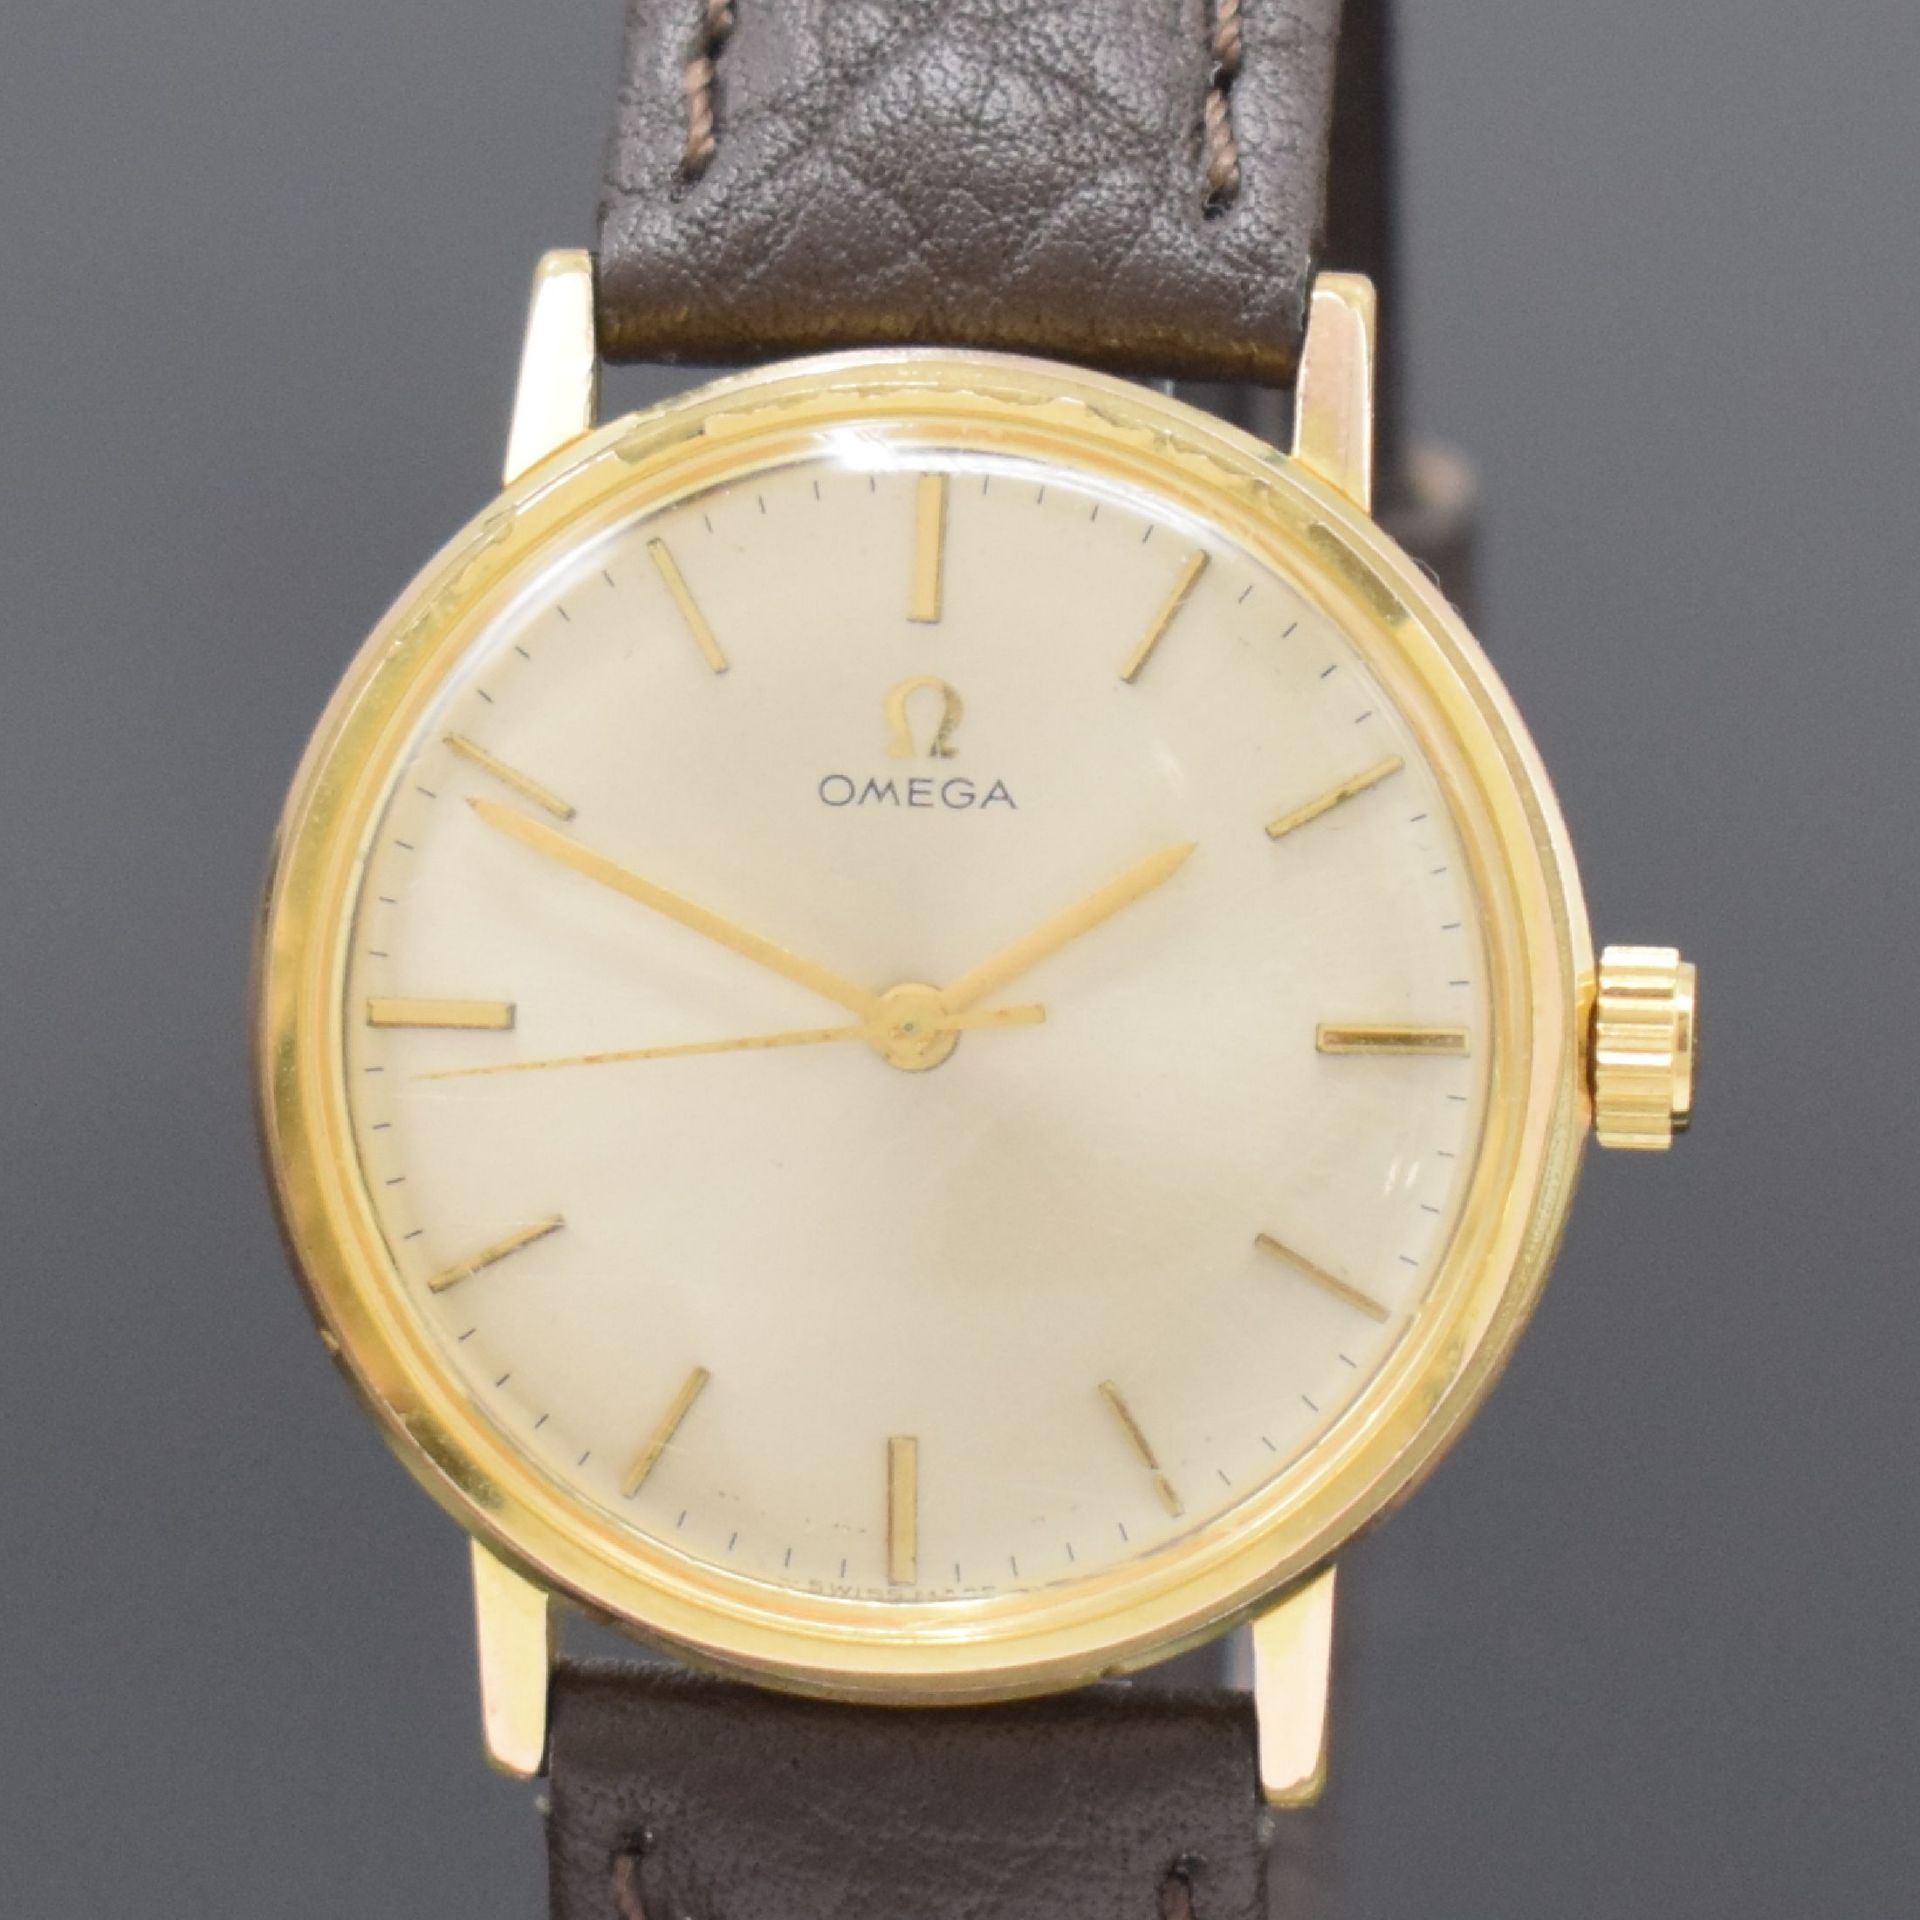 OMEGA vergoldete Armbanduhr, Schweiz um 1965, Handaufzug, - Image 2 of 6